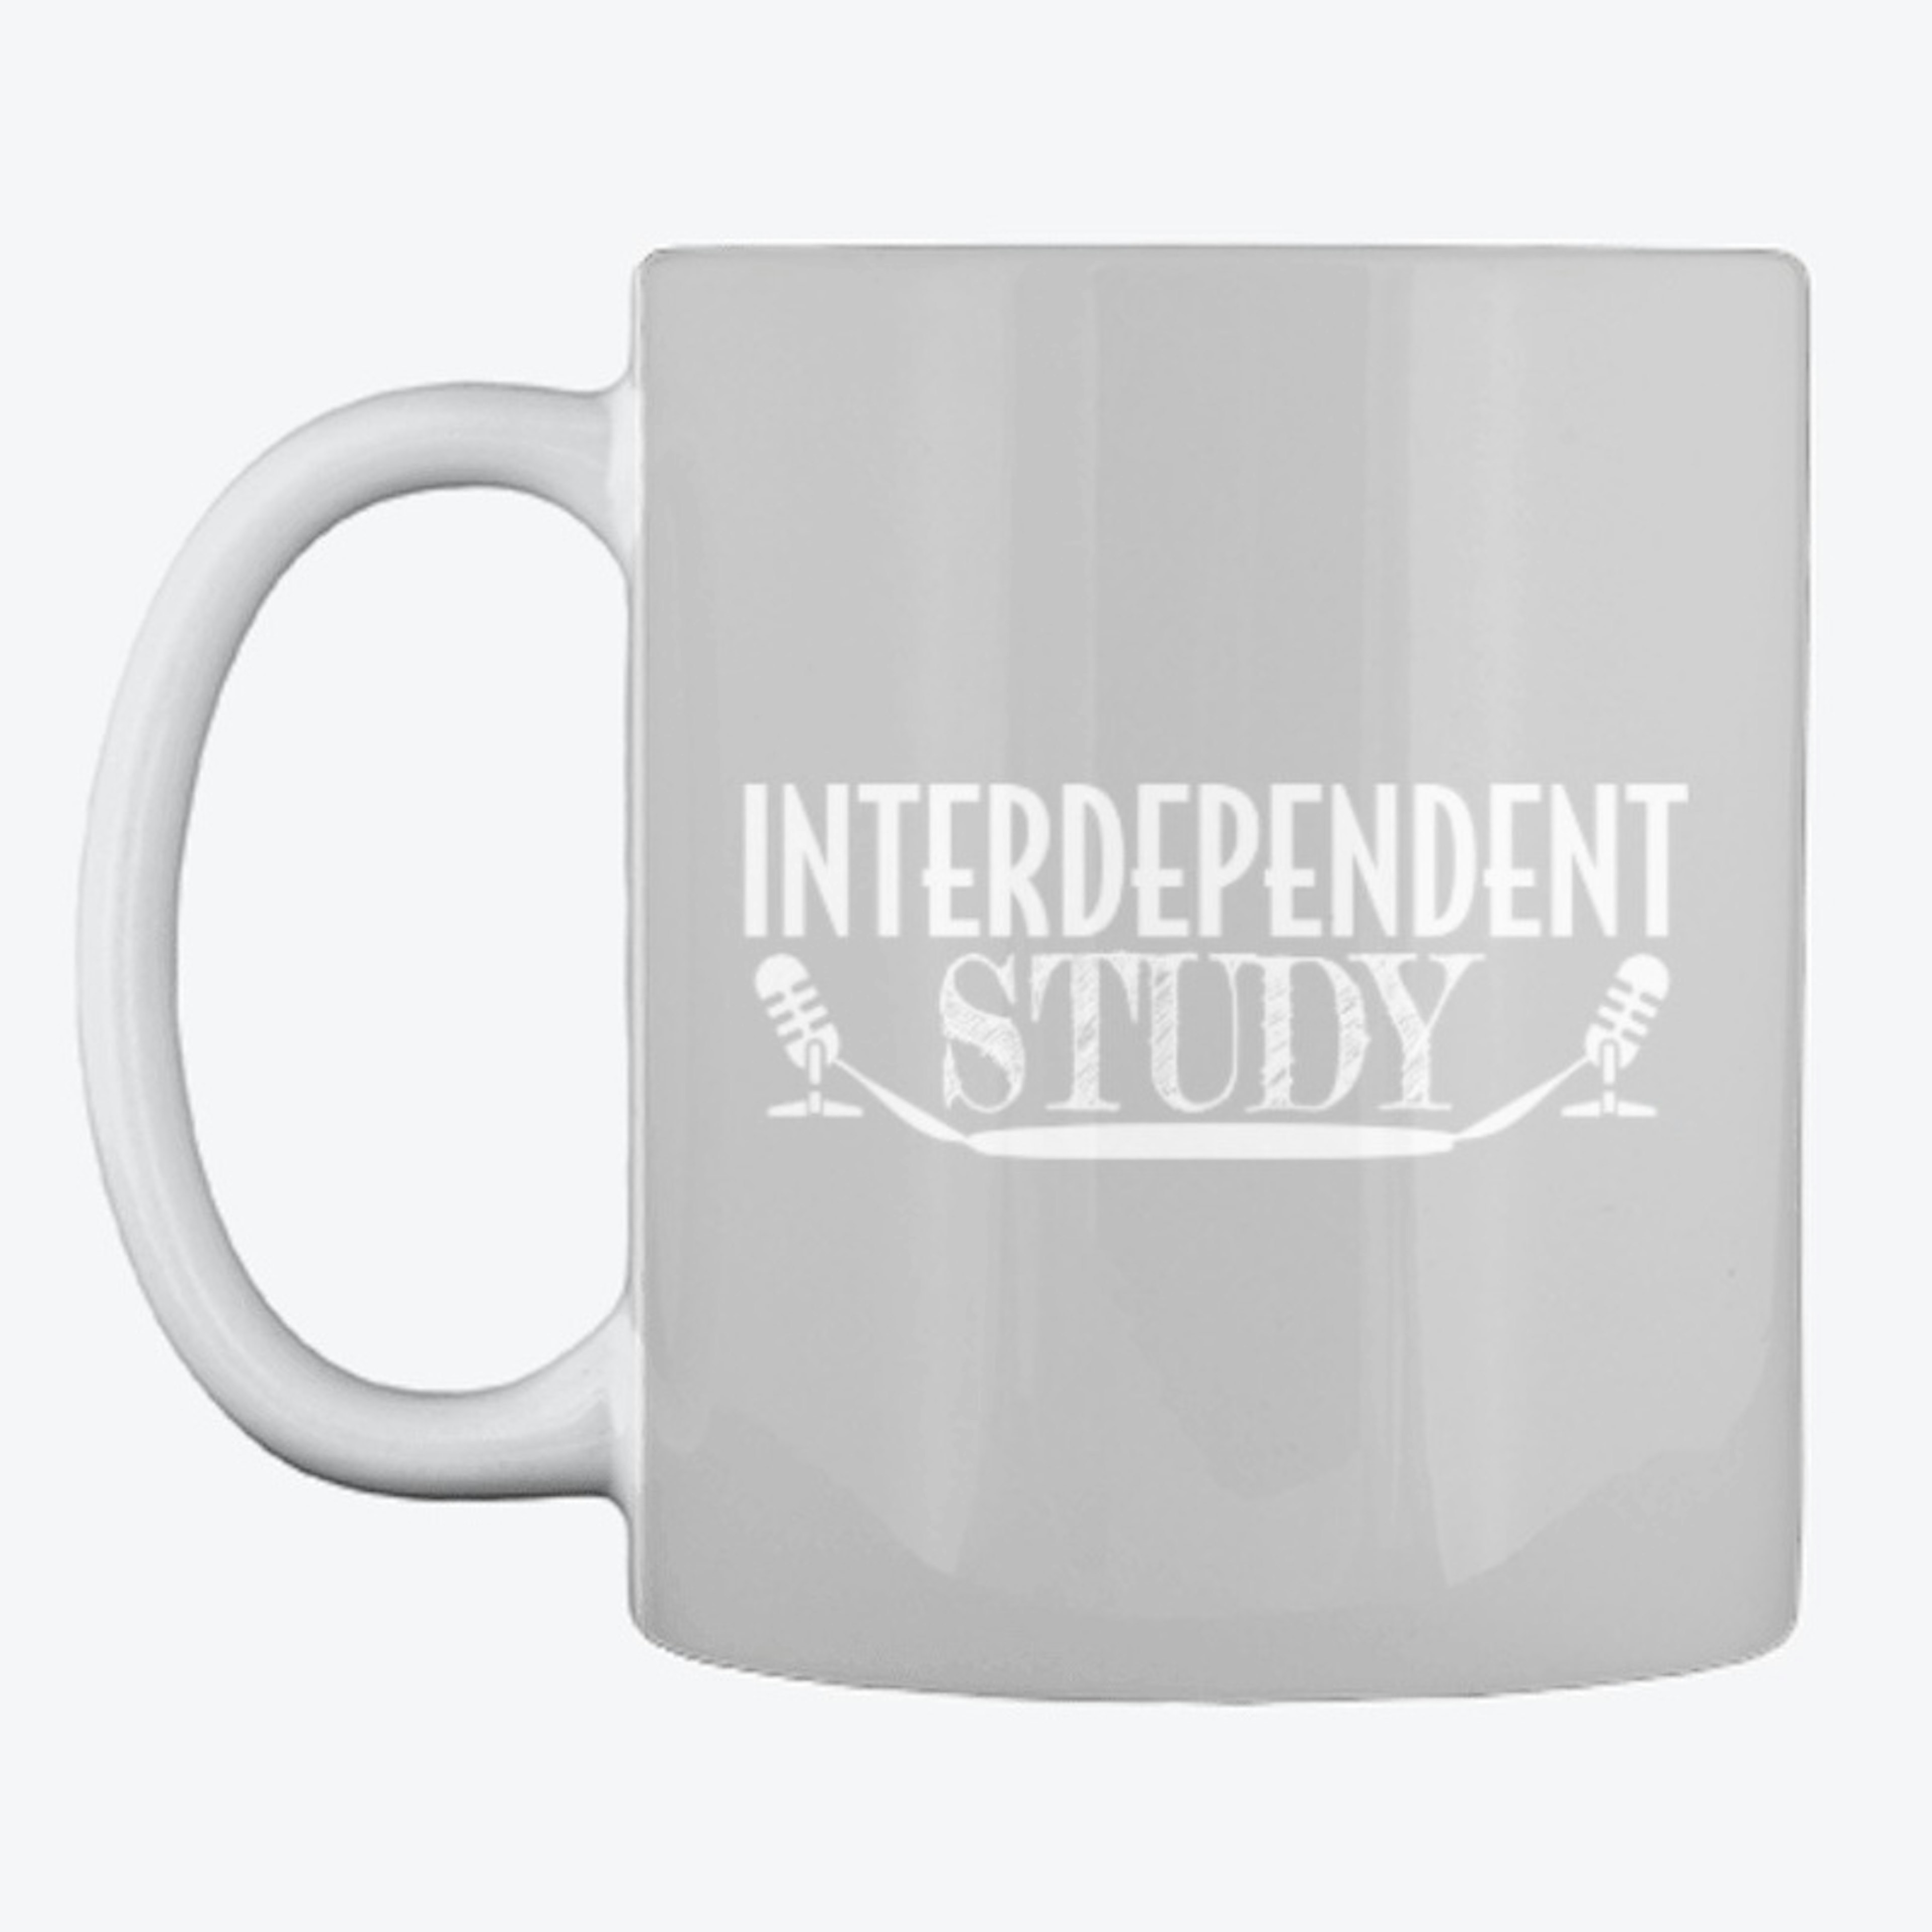 Interdependent Study Mug